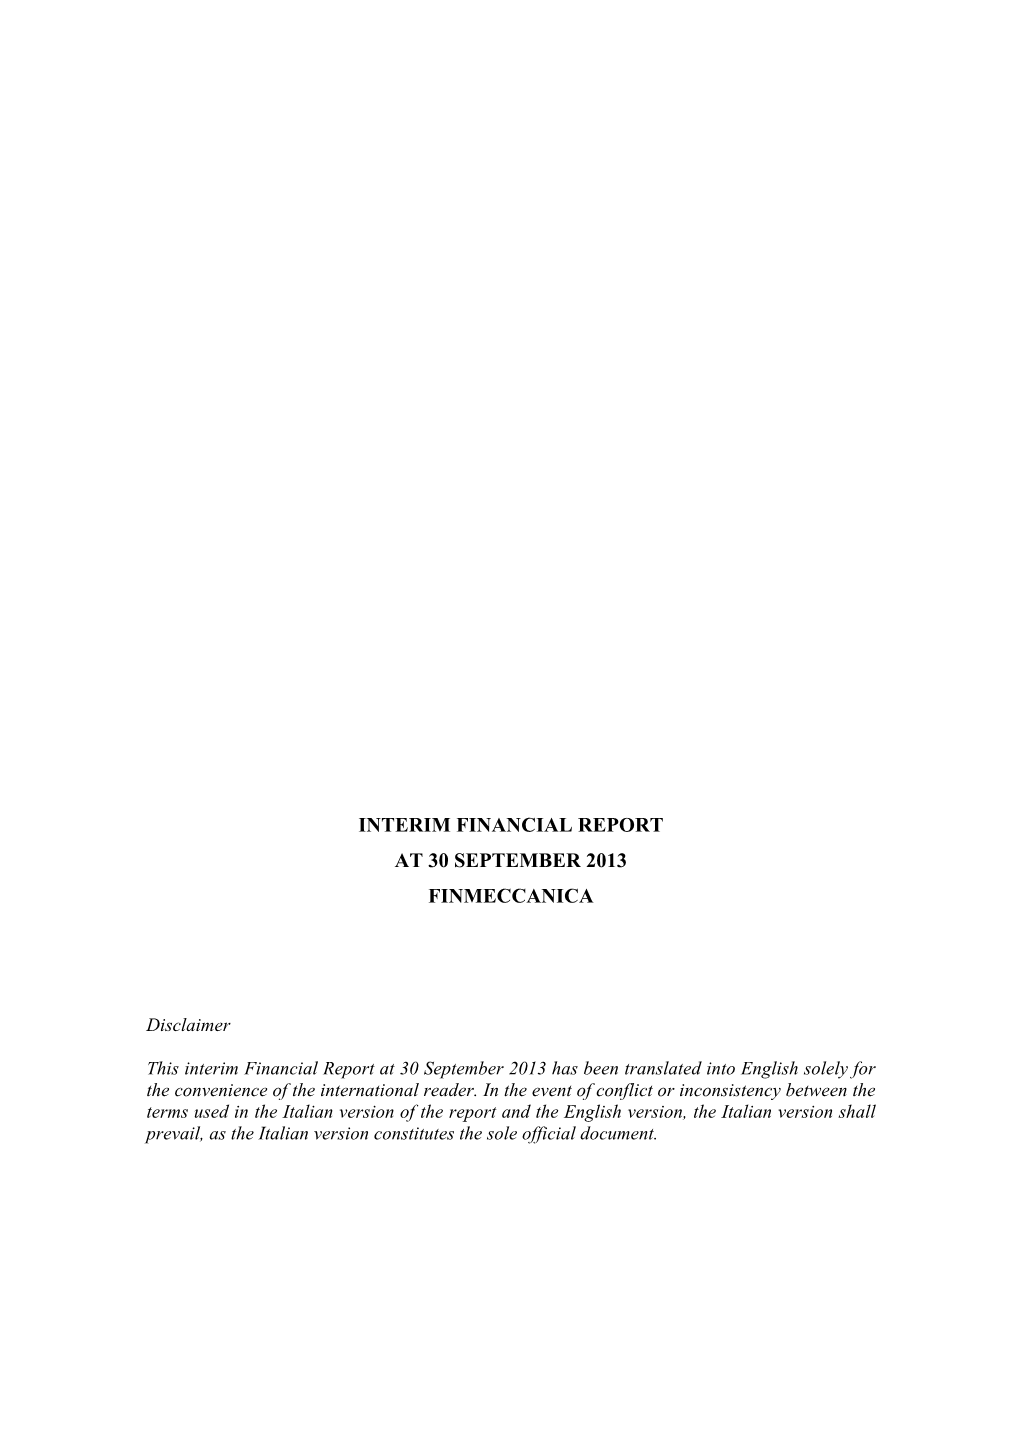 Interim Financial Report at 30 September 2013 Finmeccanica